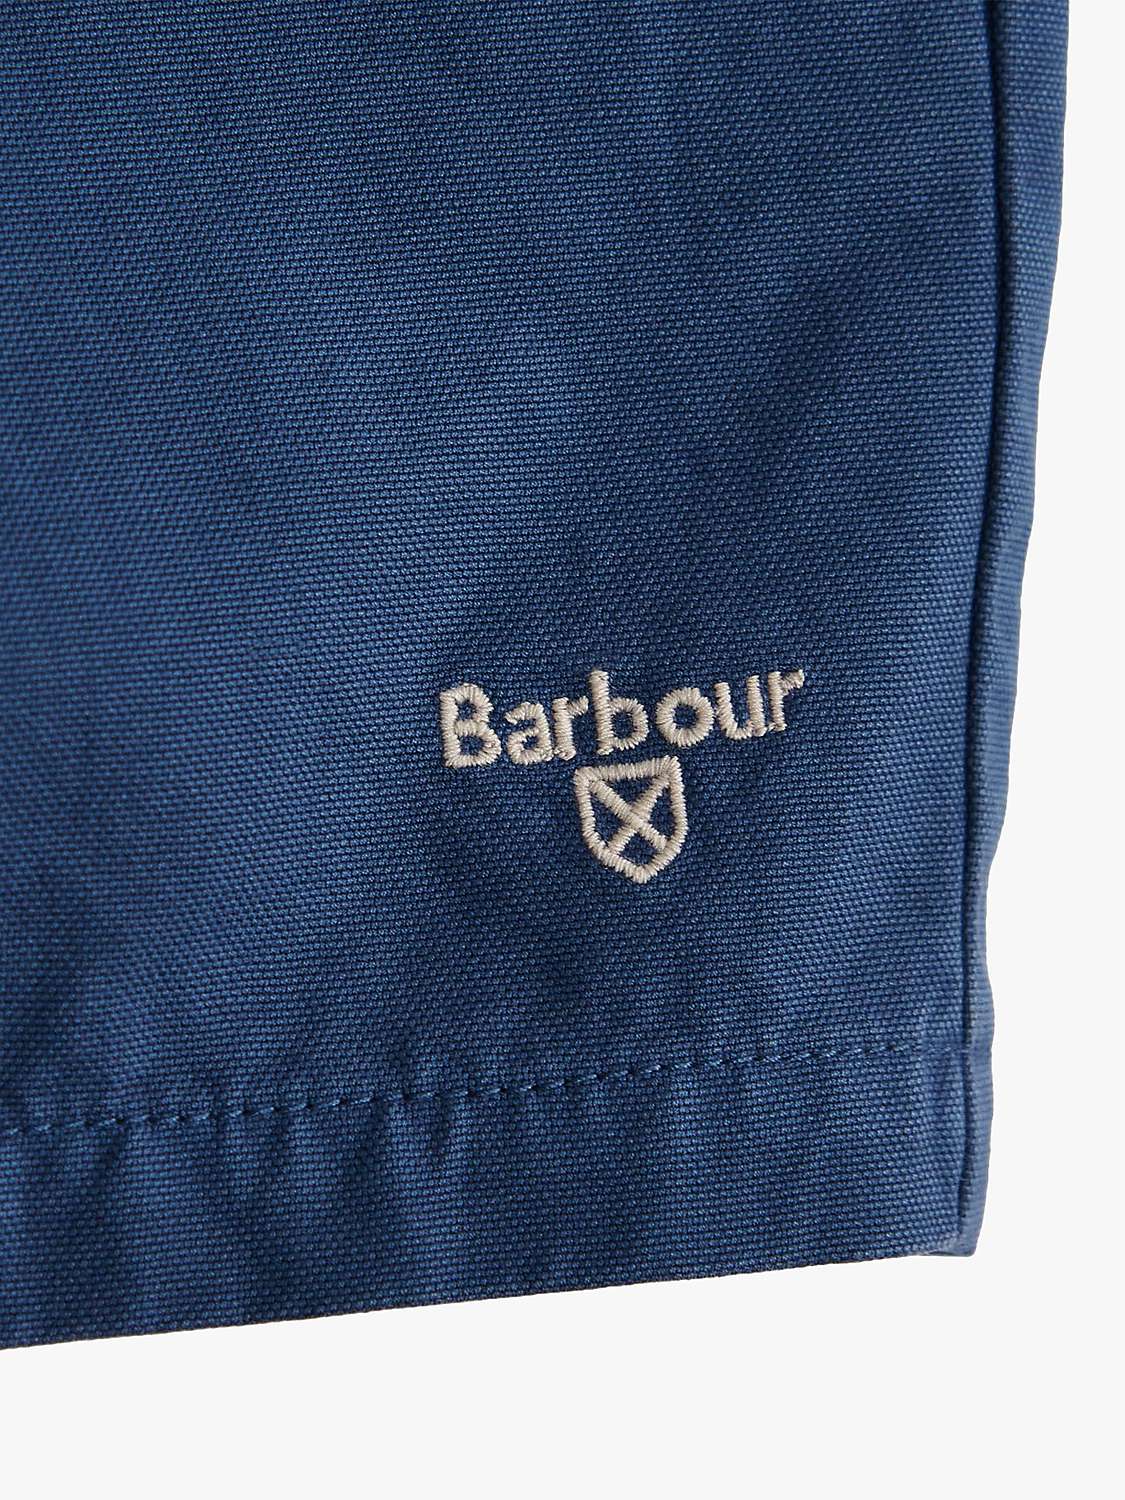 Buy Barbour Kids' Oxtown Denim Shorts, Dark Navy Online at johnlewis.com